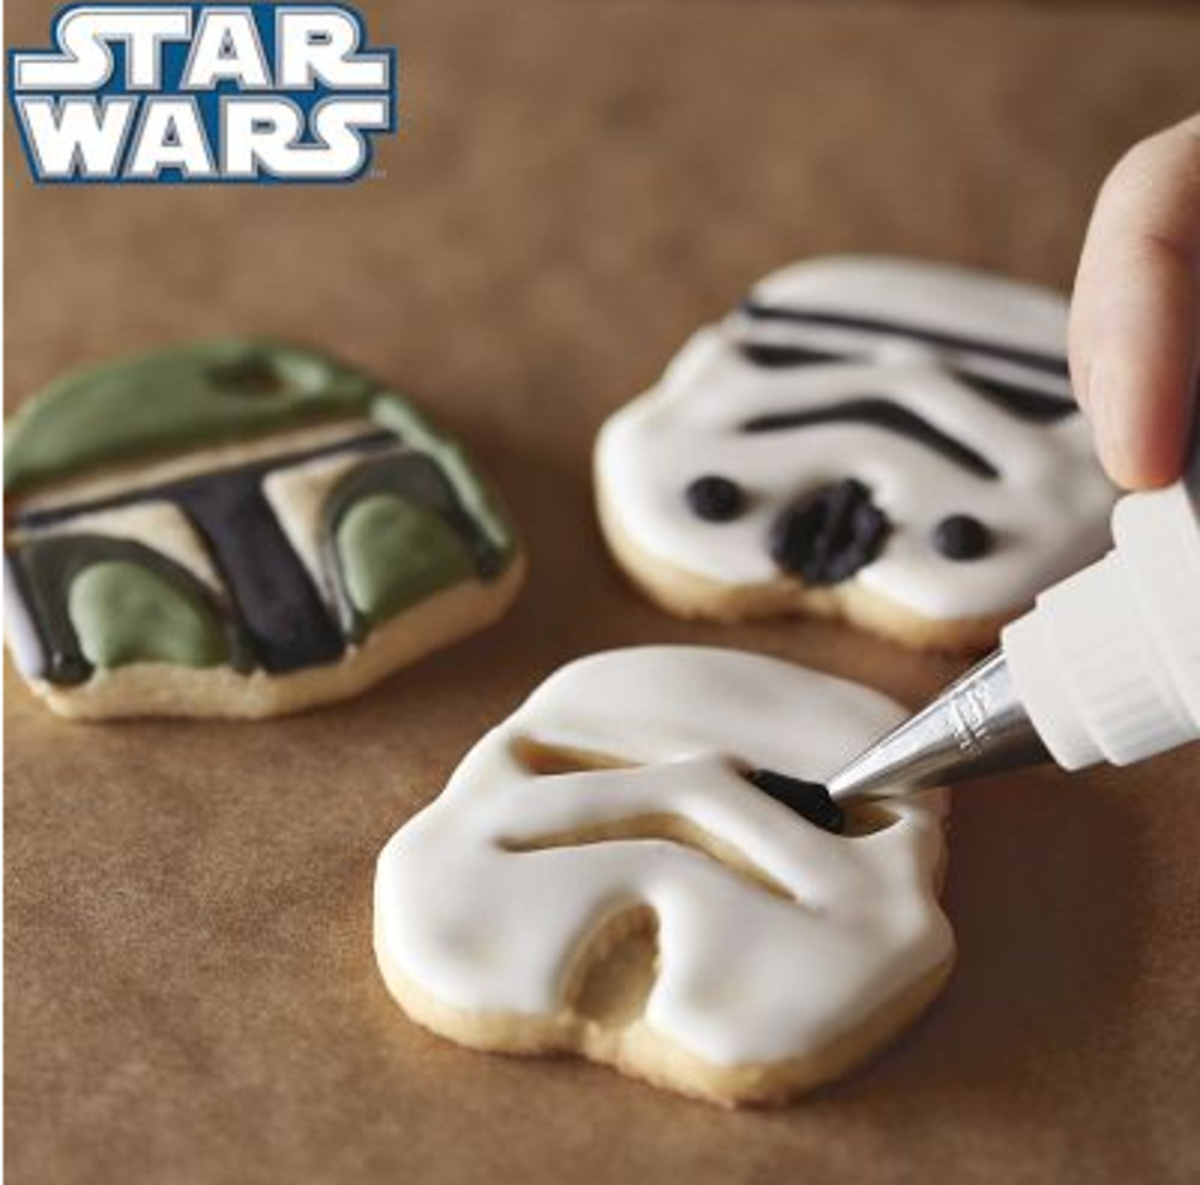 Star Wars Storm Trooper Cookie Cutters